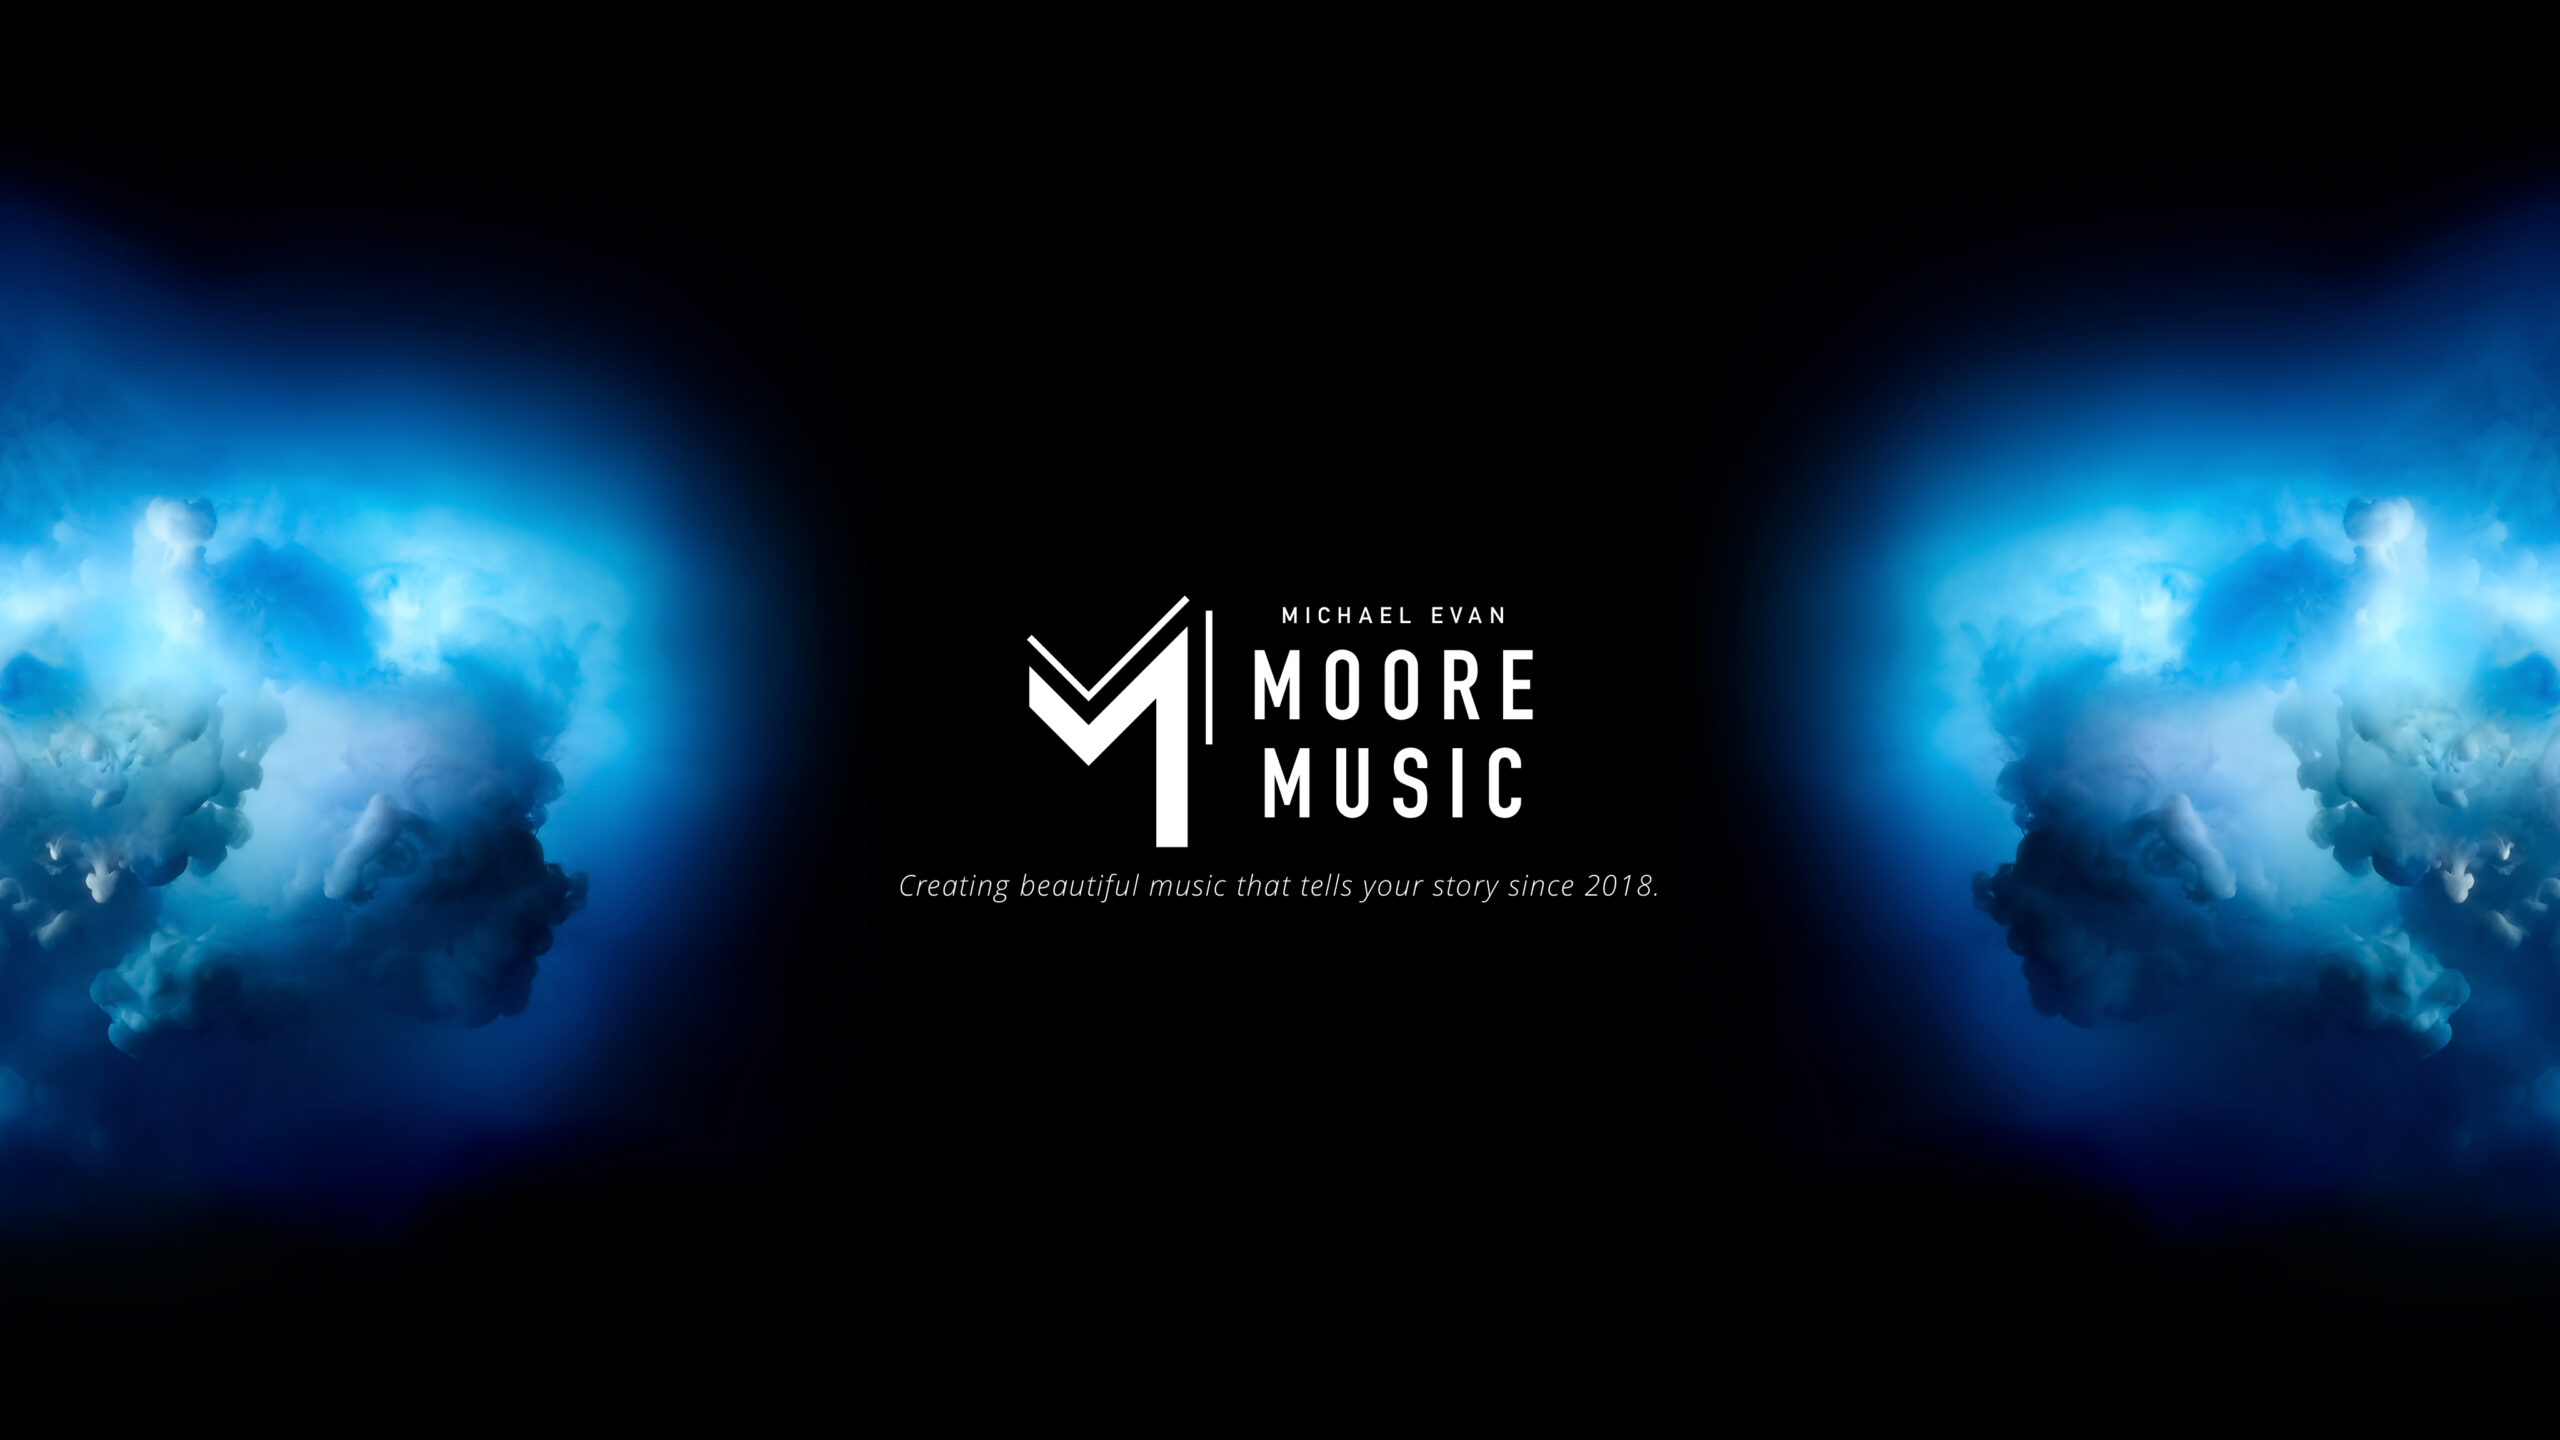 Michael Evan Moore Music Banner